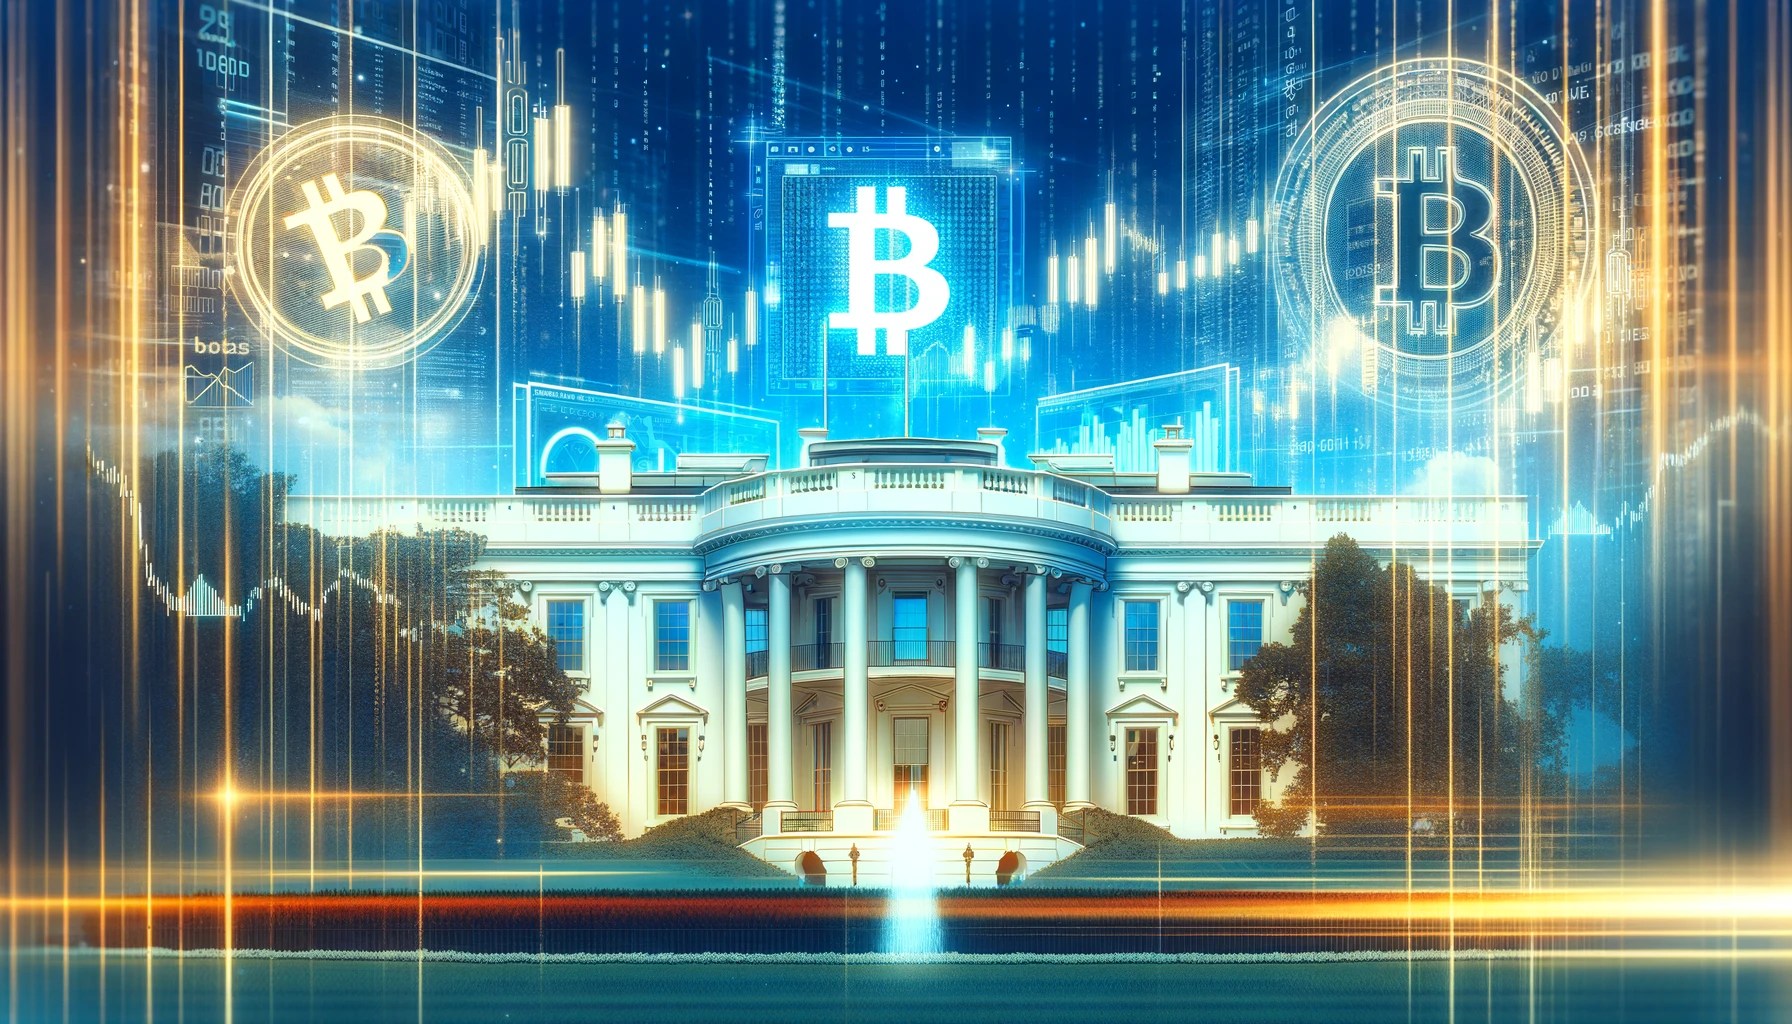 White House Bitcoin price prediction